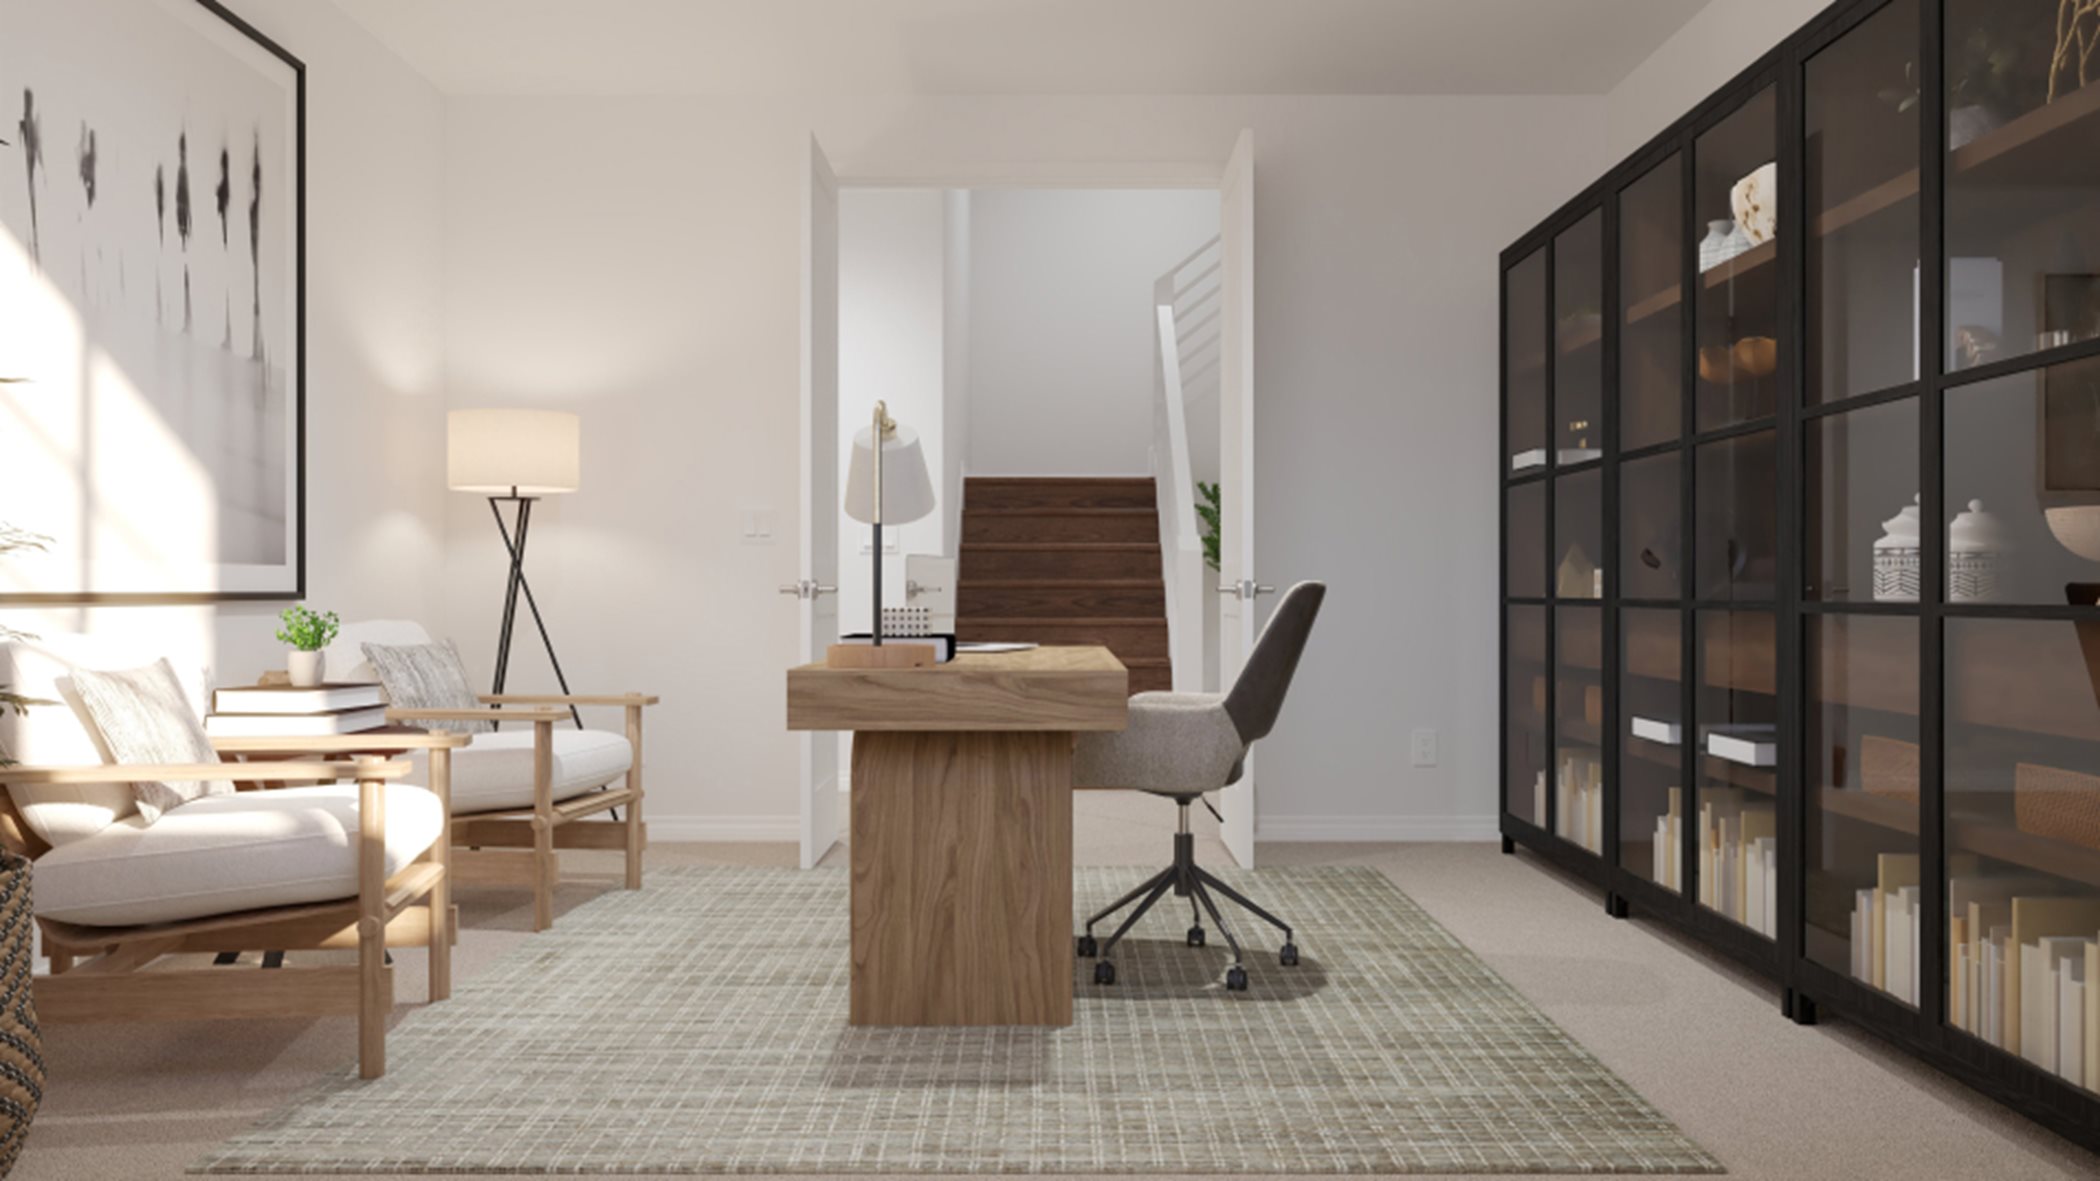 Flex room styled as an office